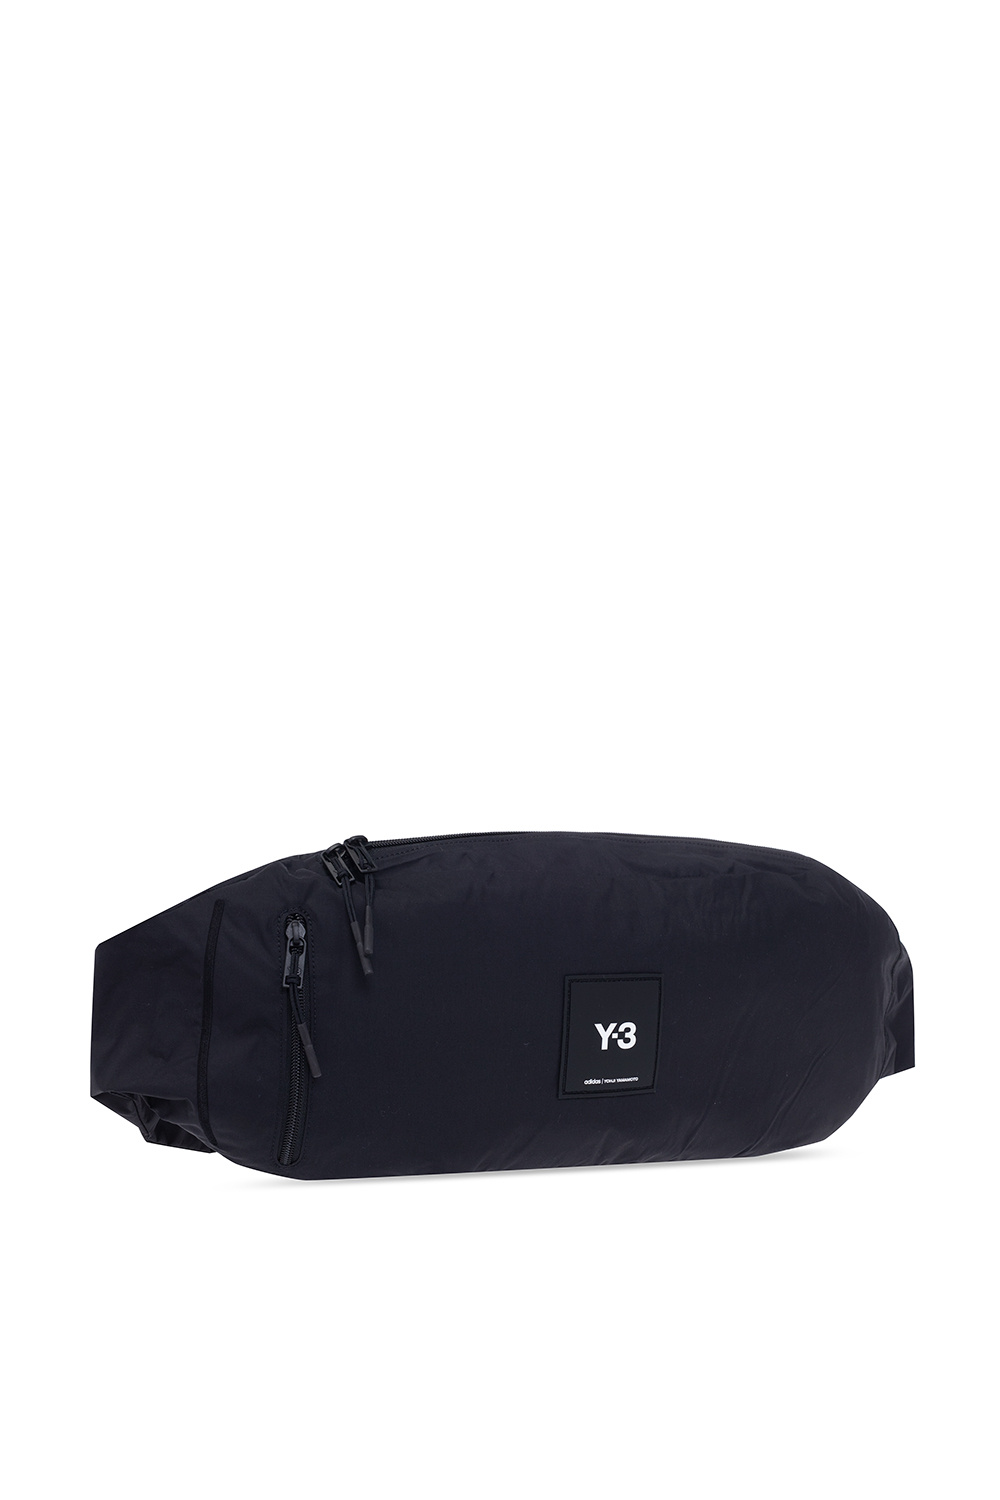 Y-3 Yohji Yamamoto these new backpacks from